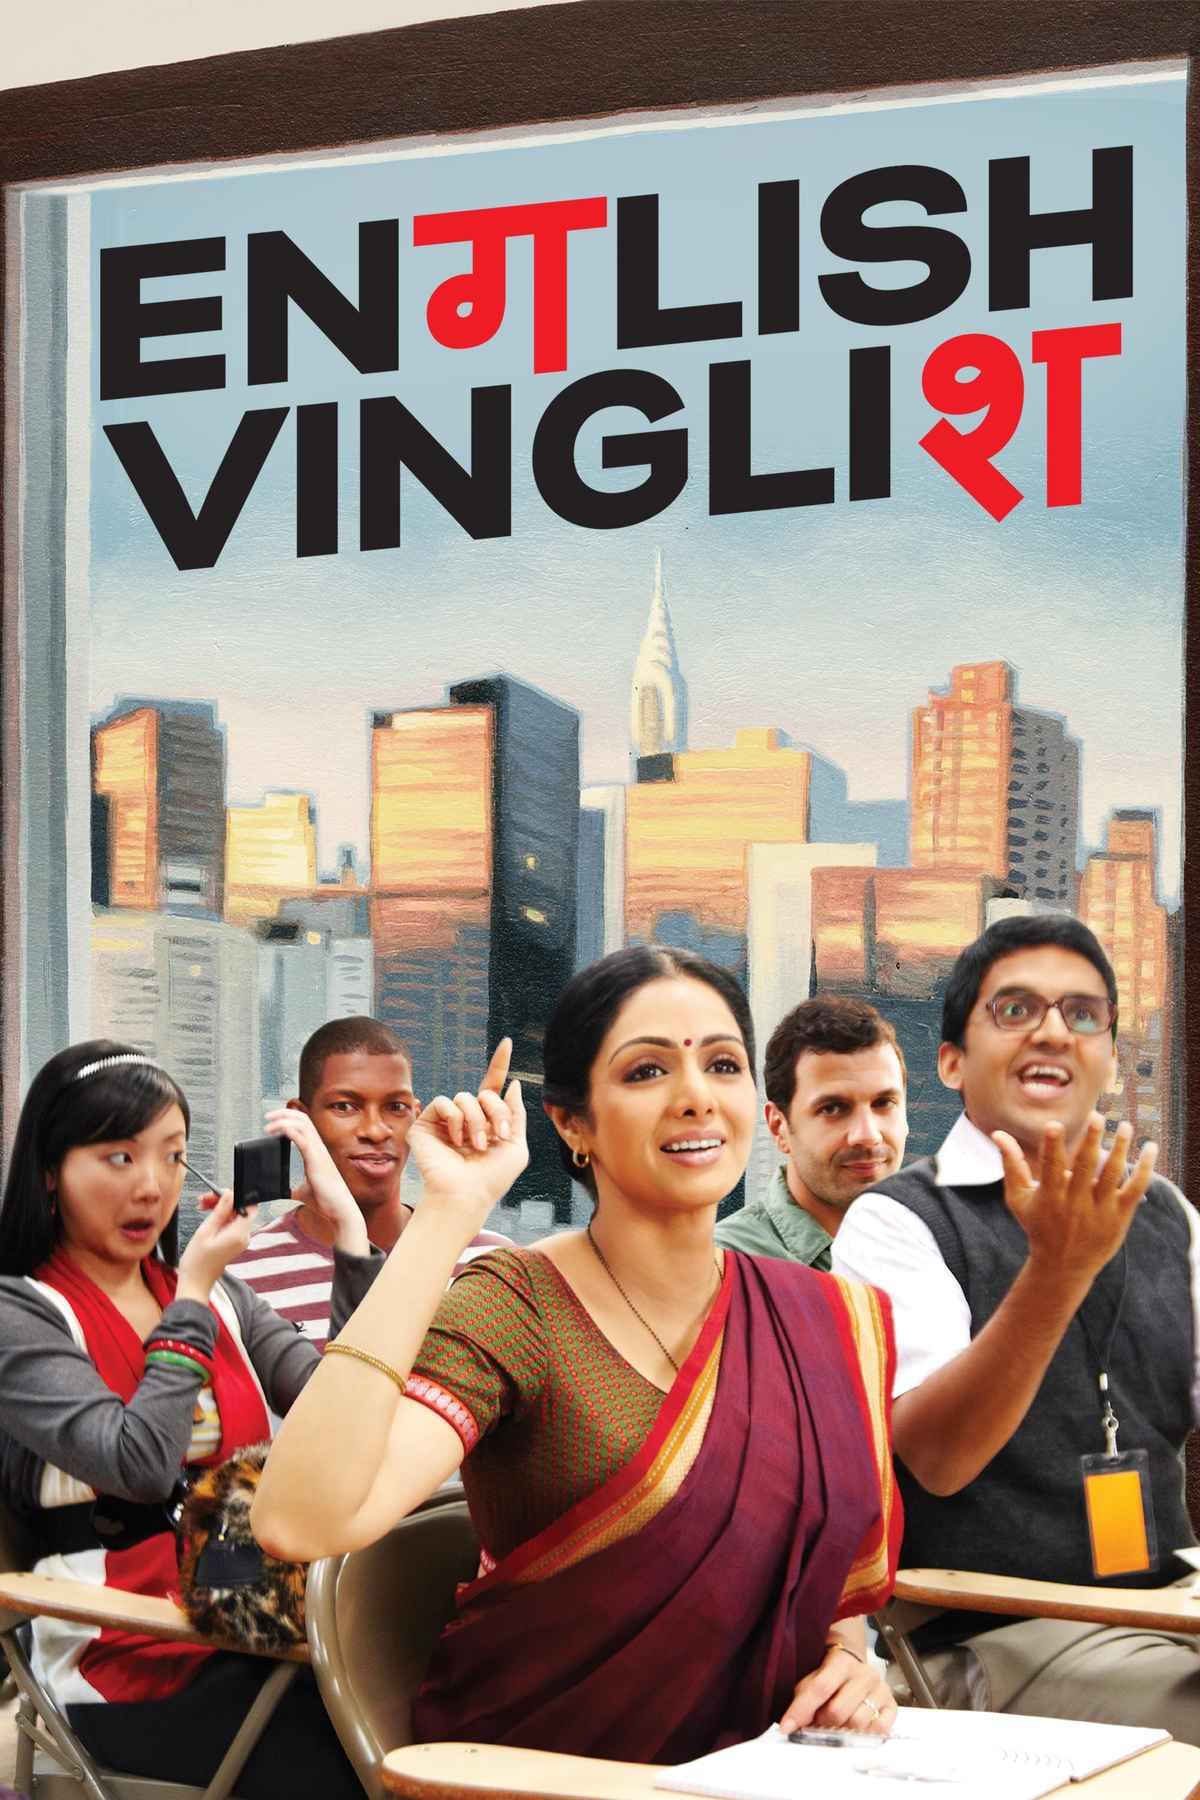 english vinglish hindi movie free download in hd